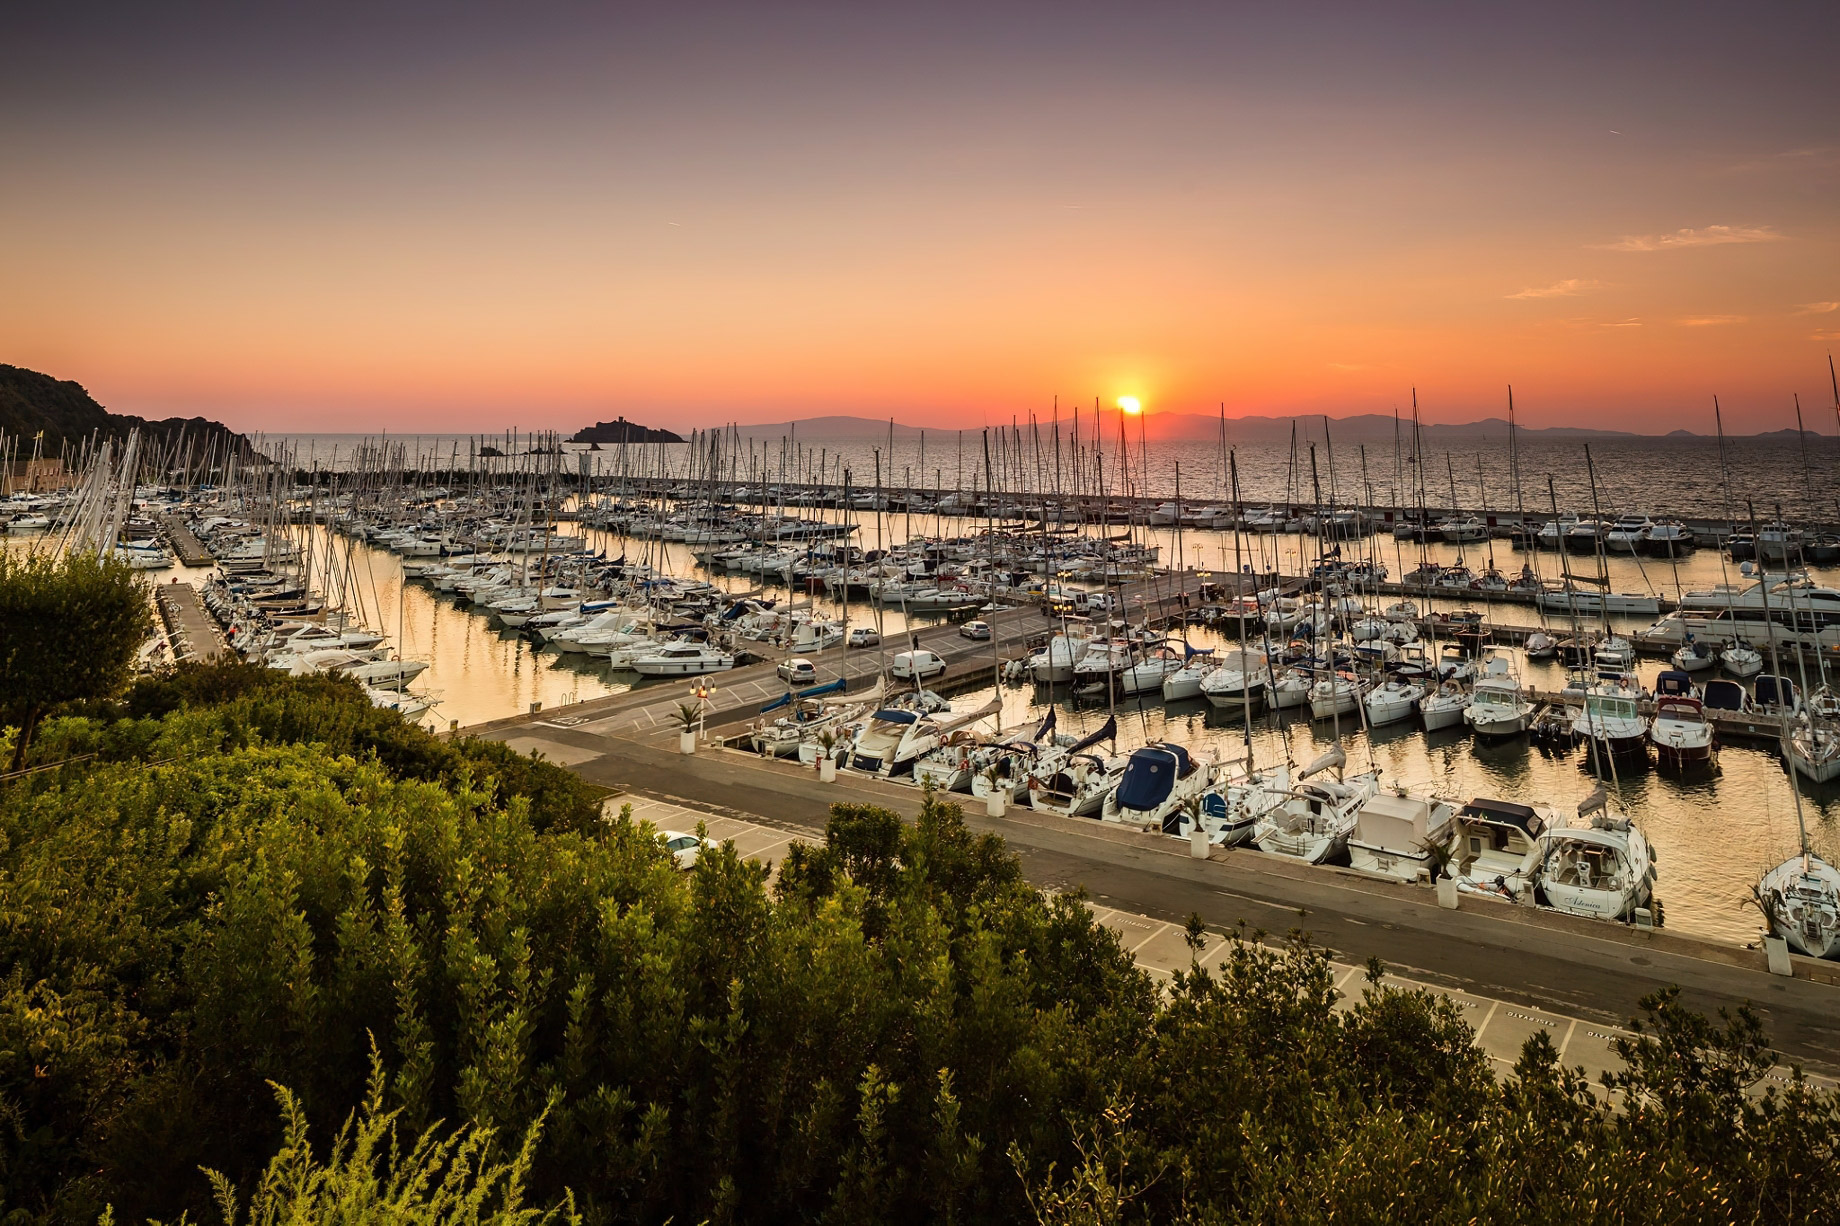 Baglioni Resort Cala del Porto Tuscany - Punta Ala, Italy - Marina View Sunset